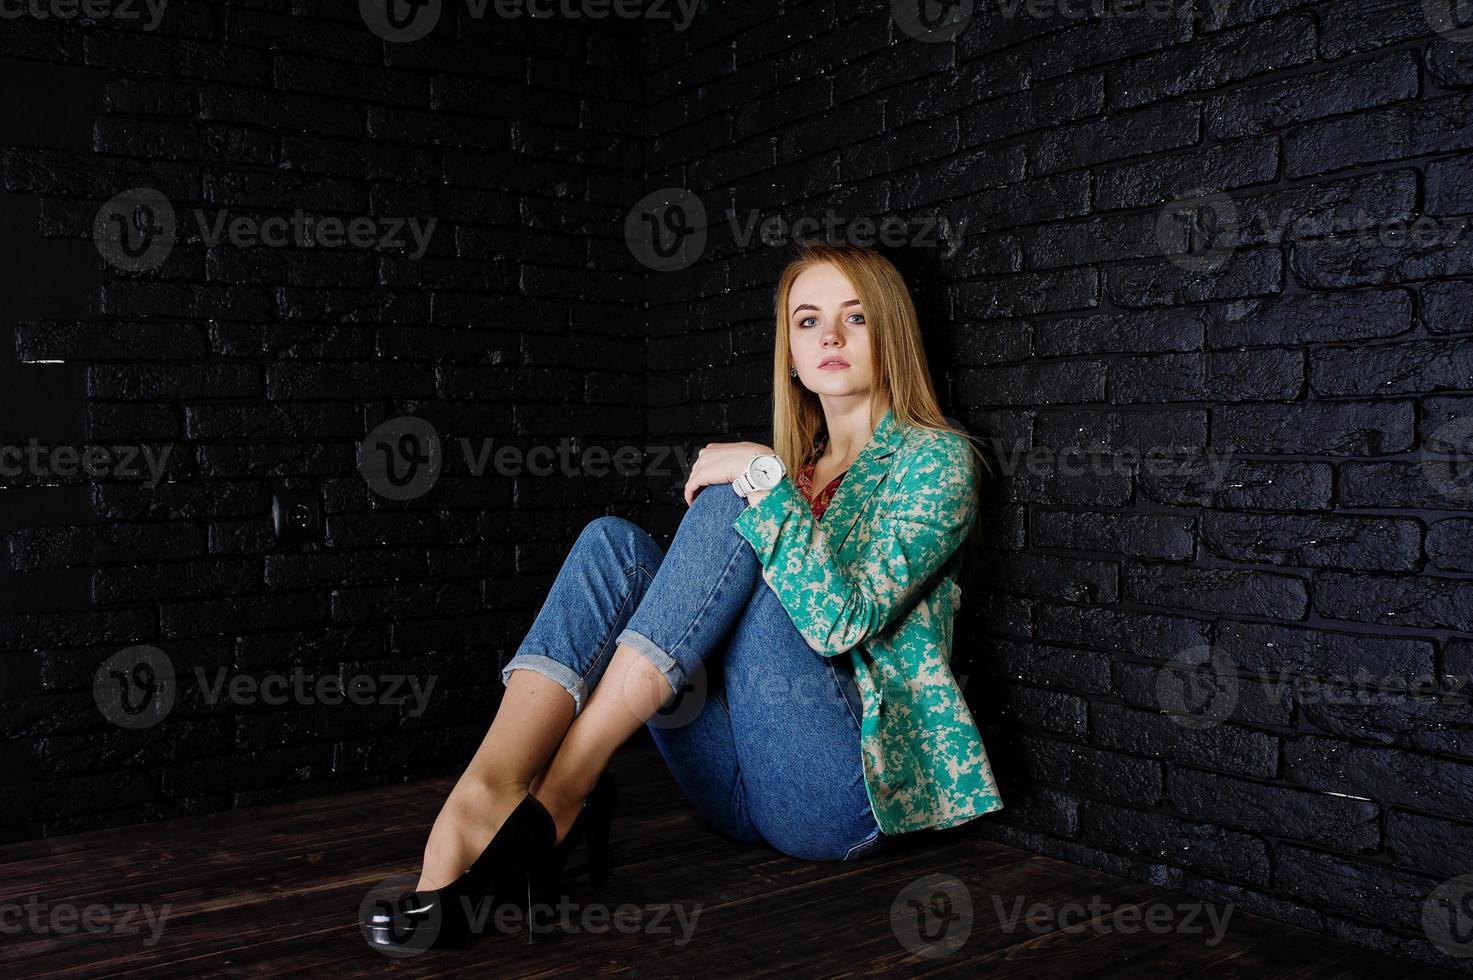 menina loira elegante jaqueta e jeans contra a parede de tijolo preto no estúdio. foto